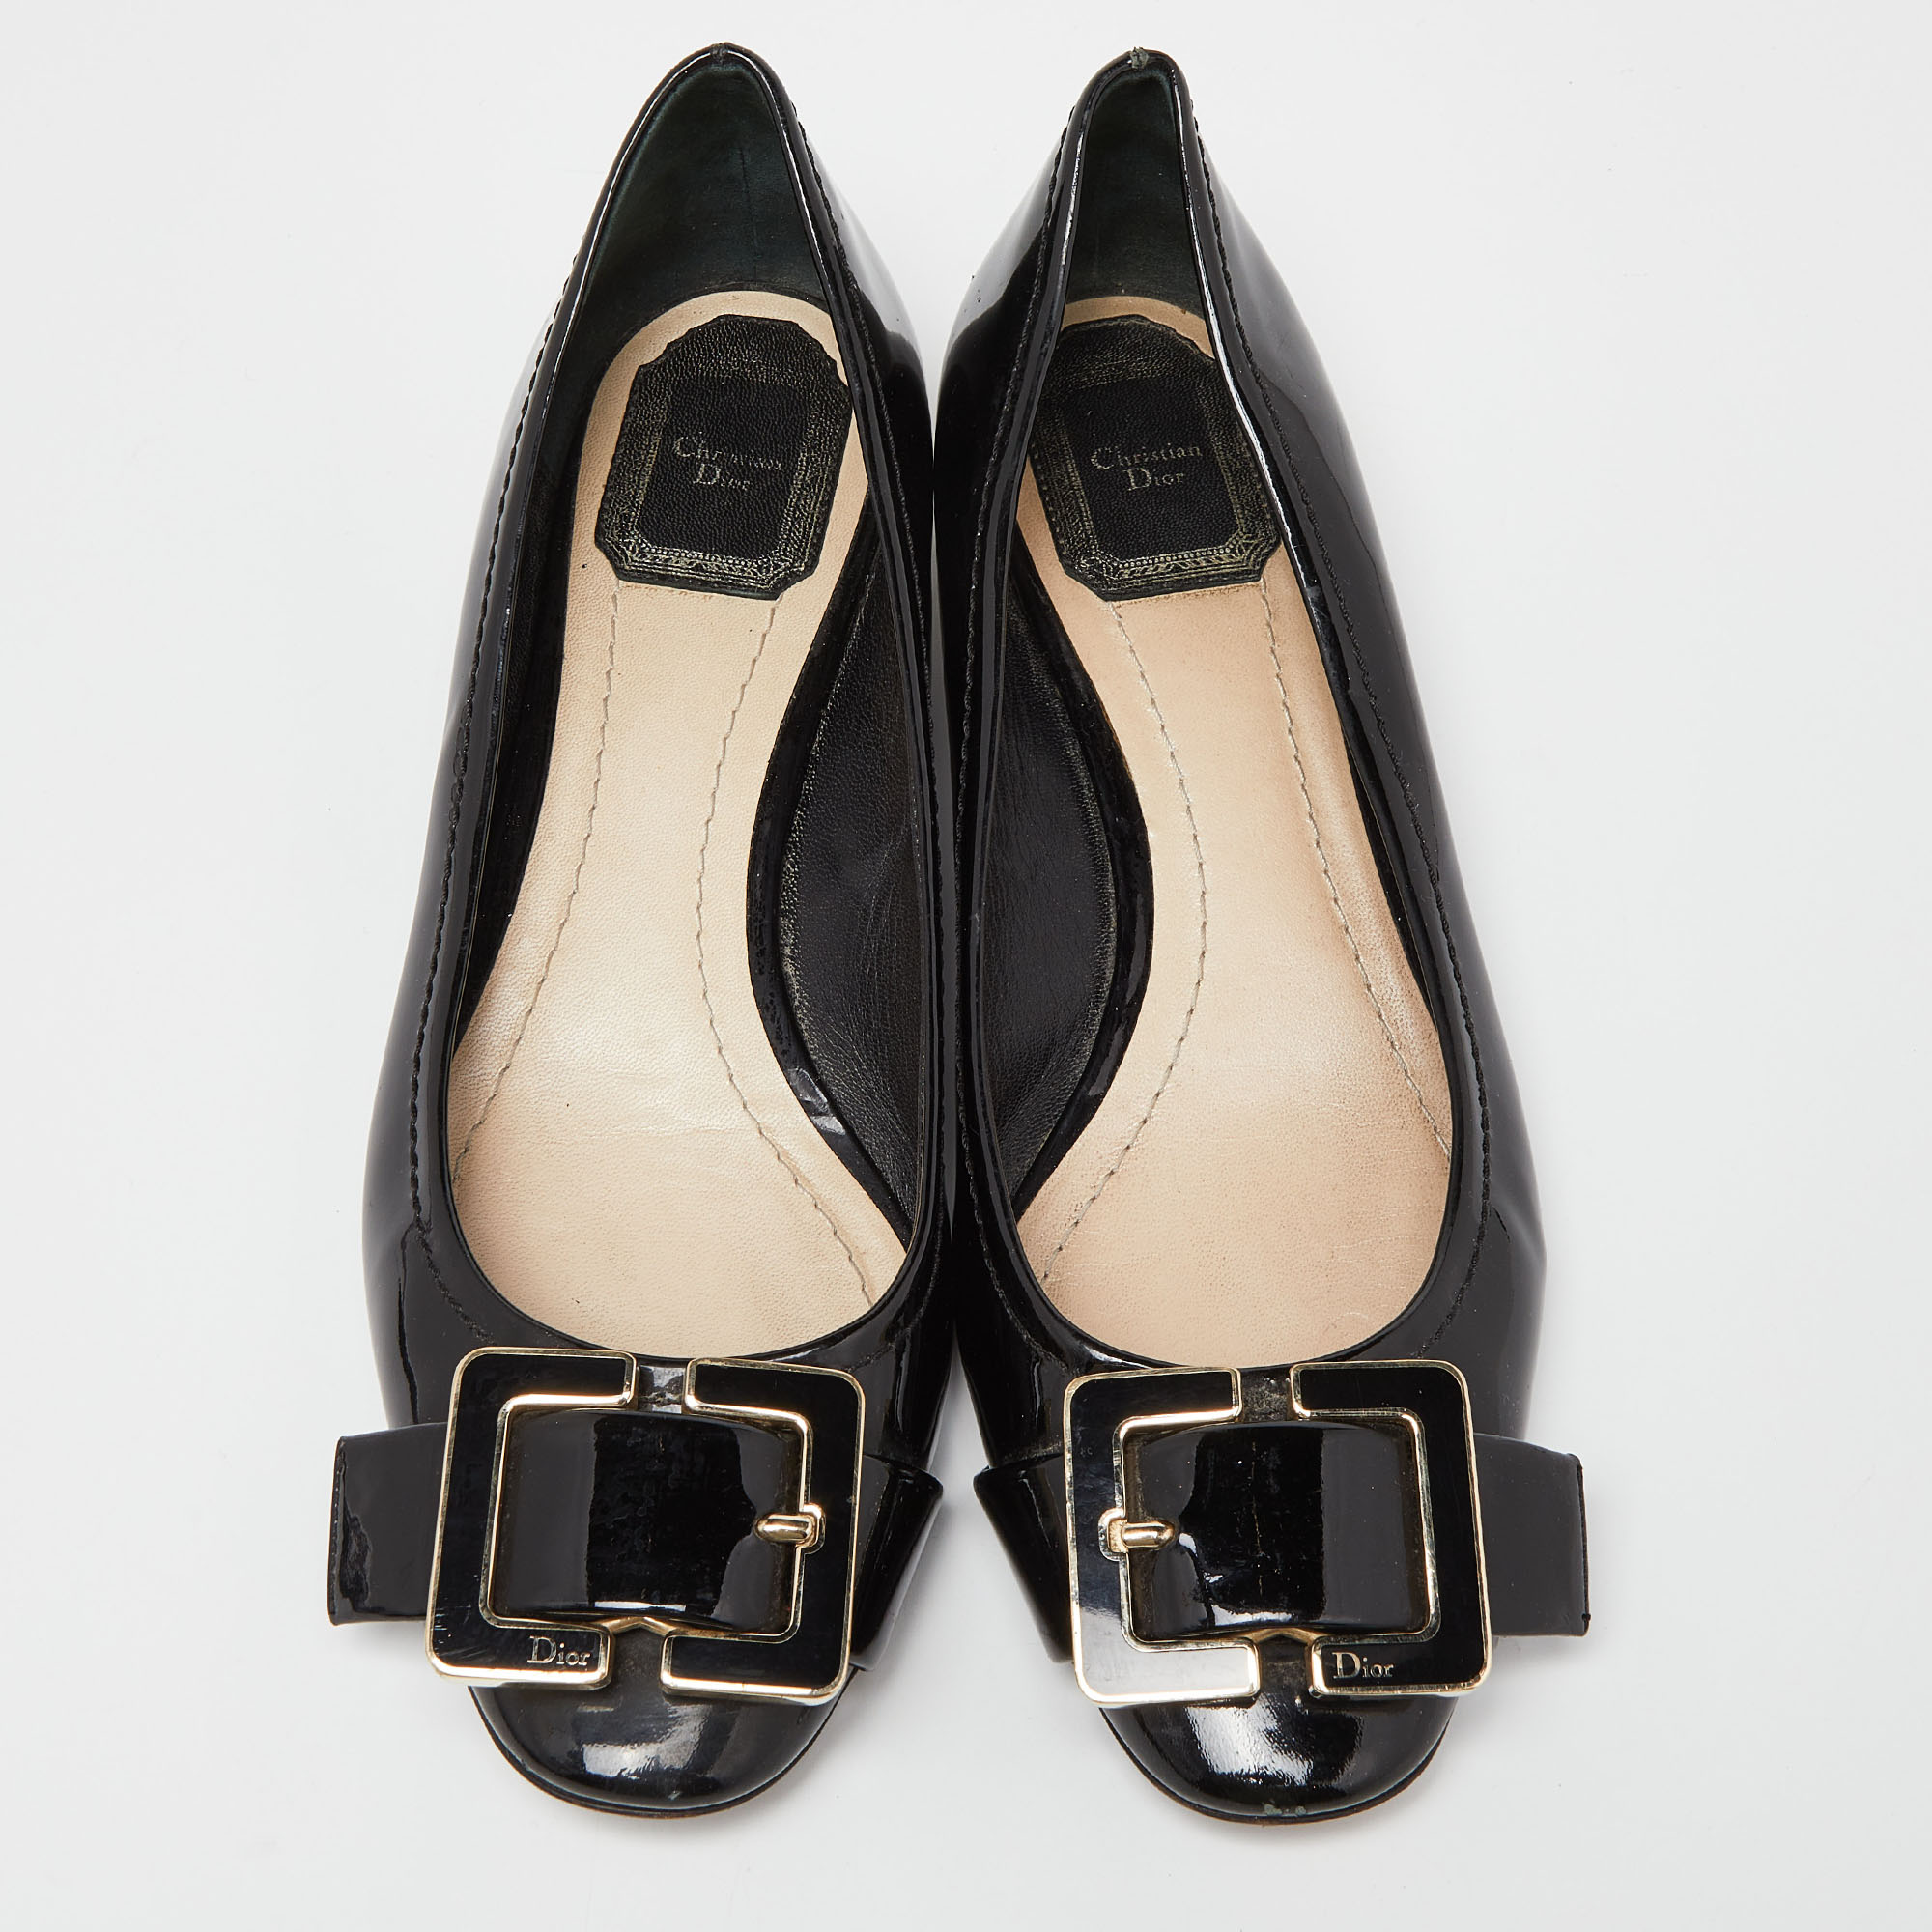 Dior Black Patent Leather Logo Ballet Flats Size 38.5